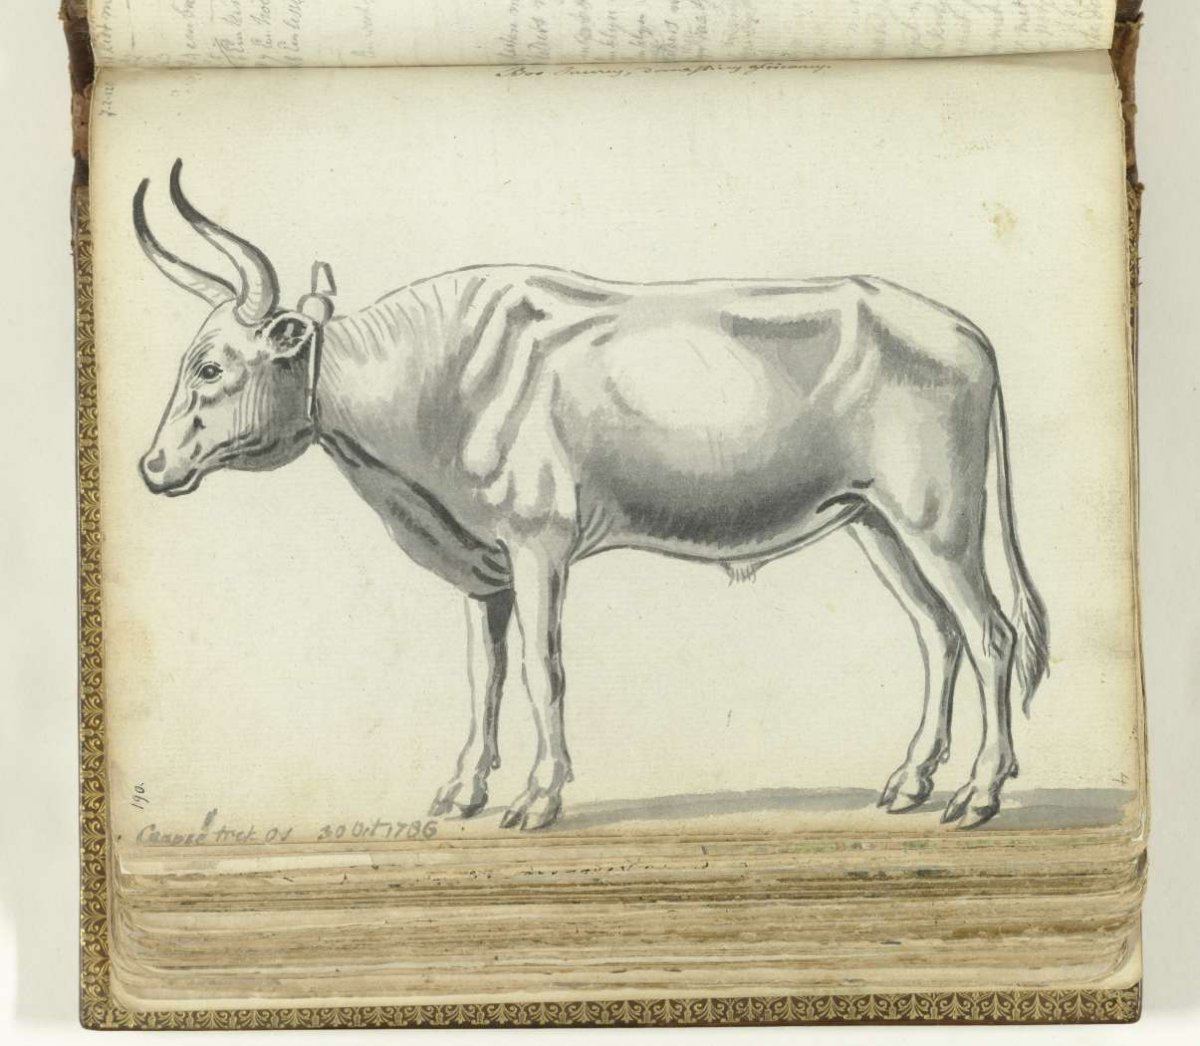 Caapse trekos, Jan Brandes, 1786